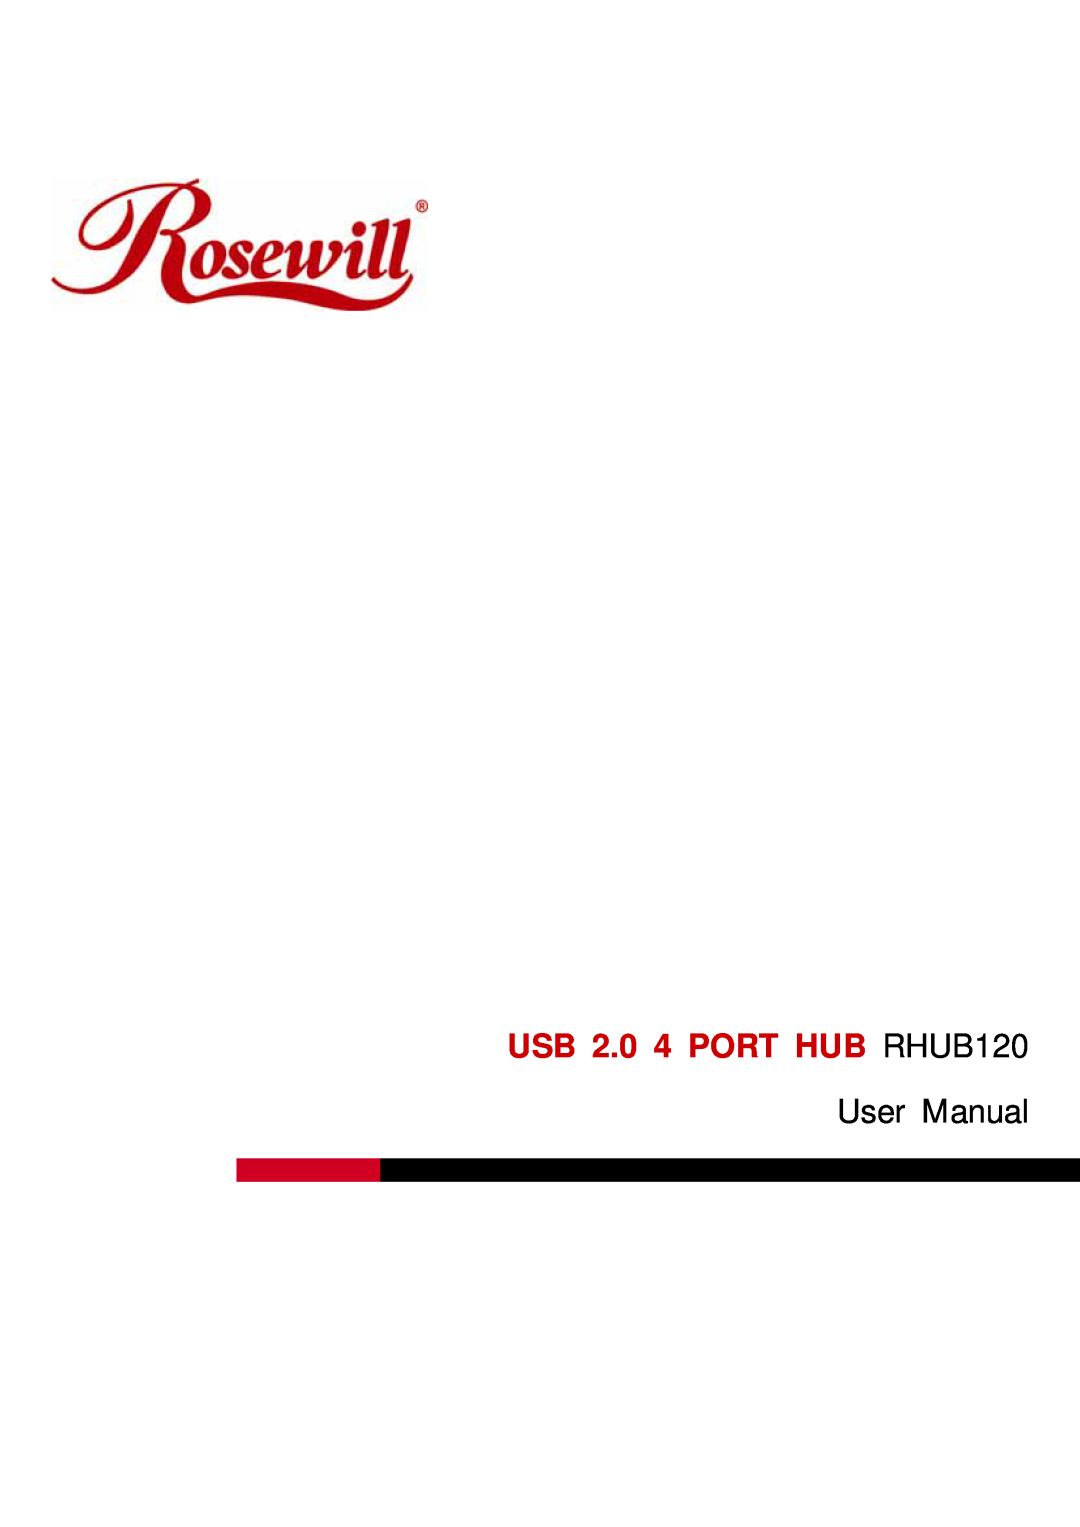 Rosewill user manual USB 2.0 4 PORT HUB RHUB120, User Manual 